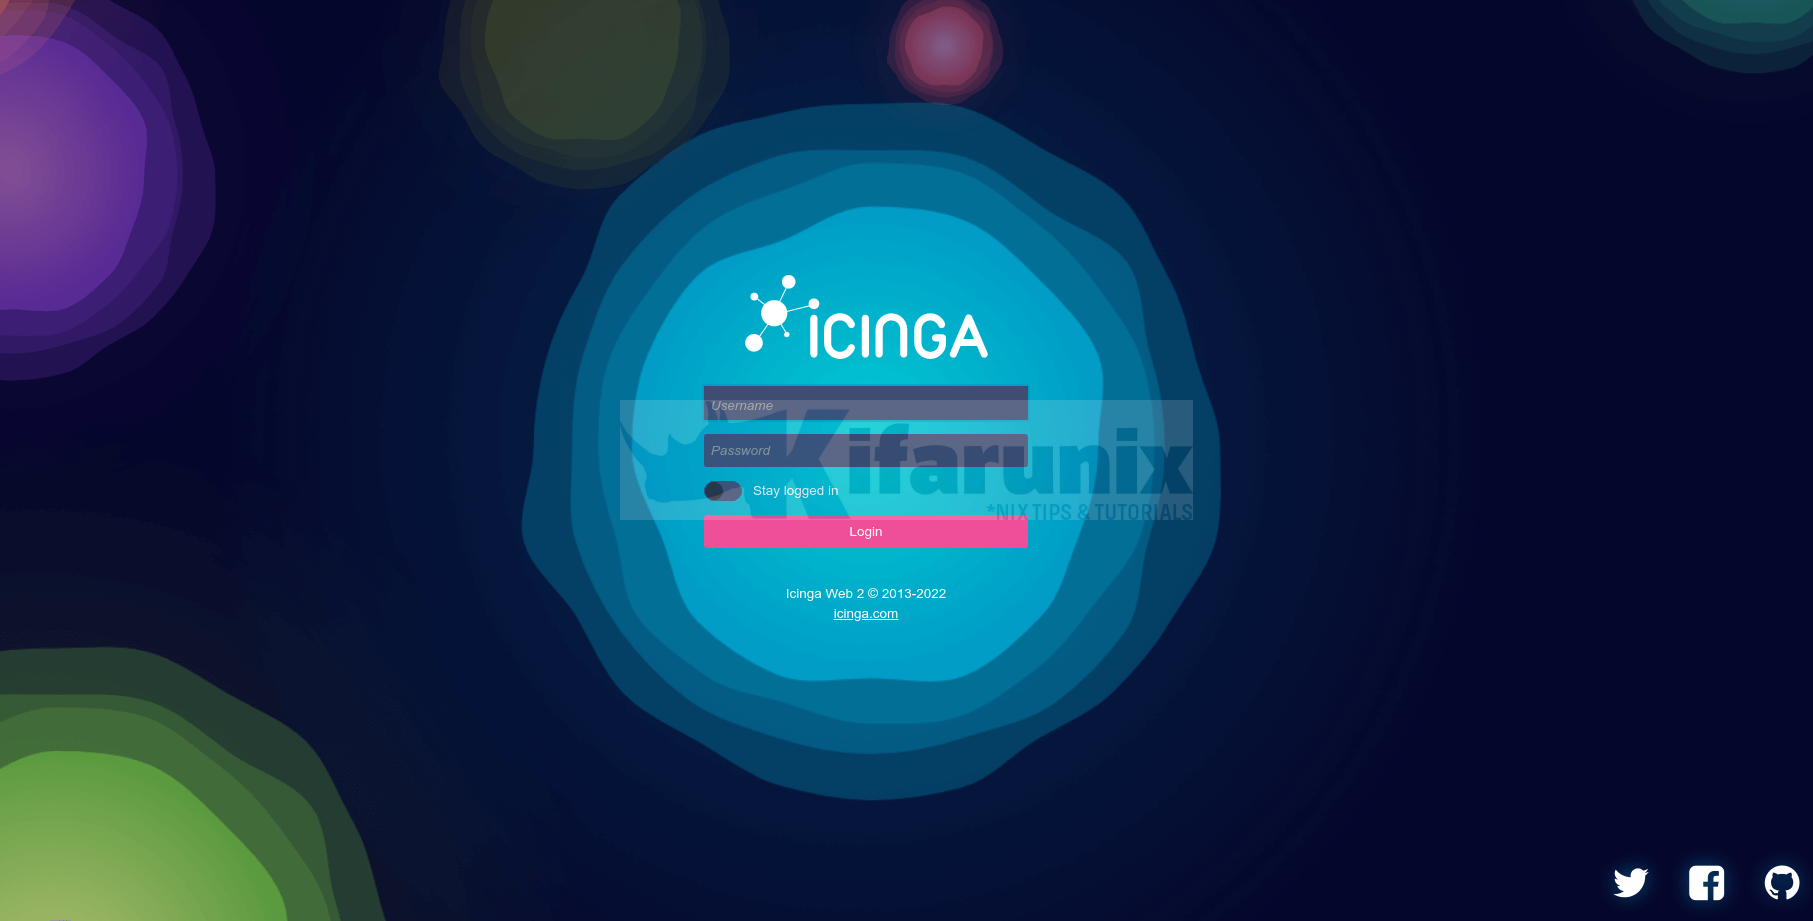 Install Icinga 2 and Icinga Web 2 on Ubuntu 20.04